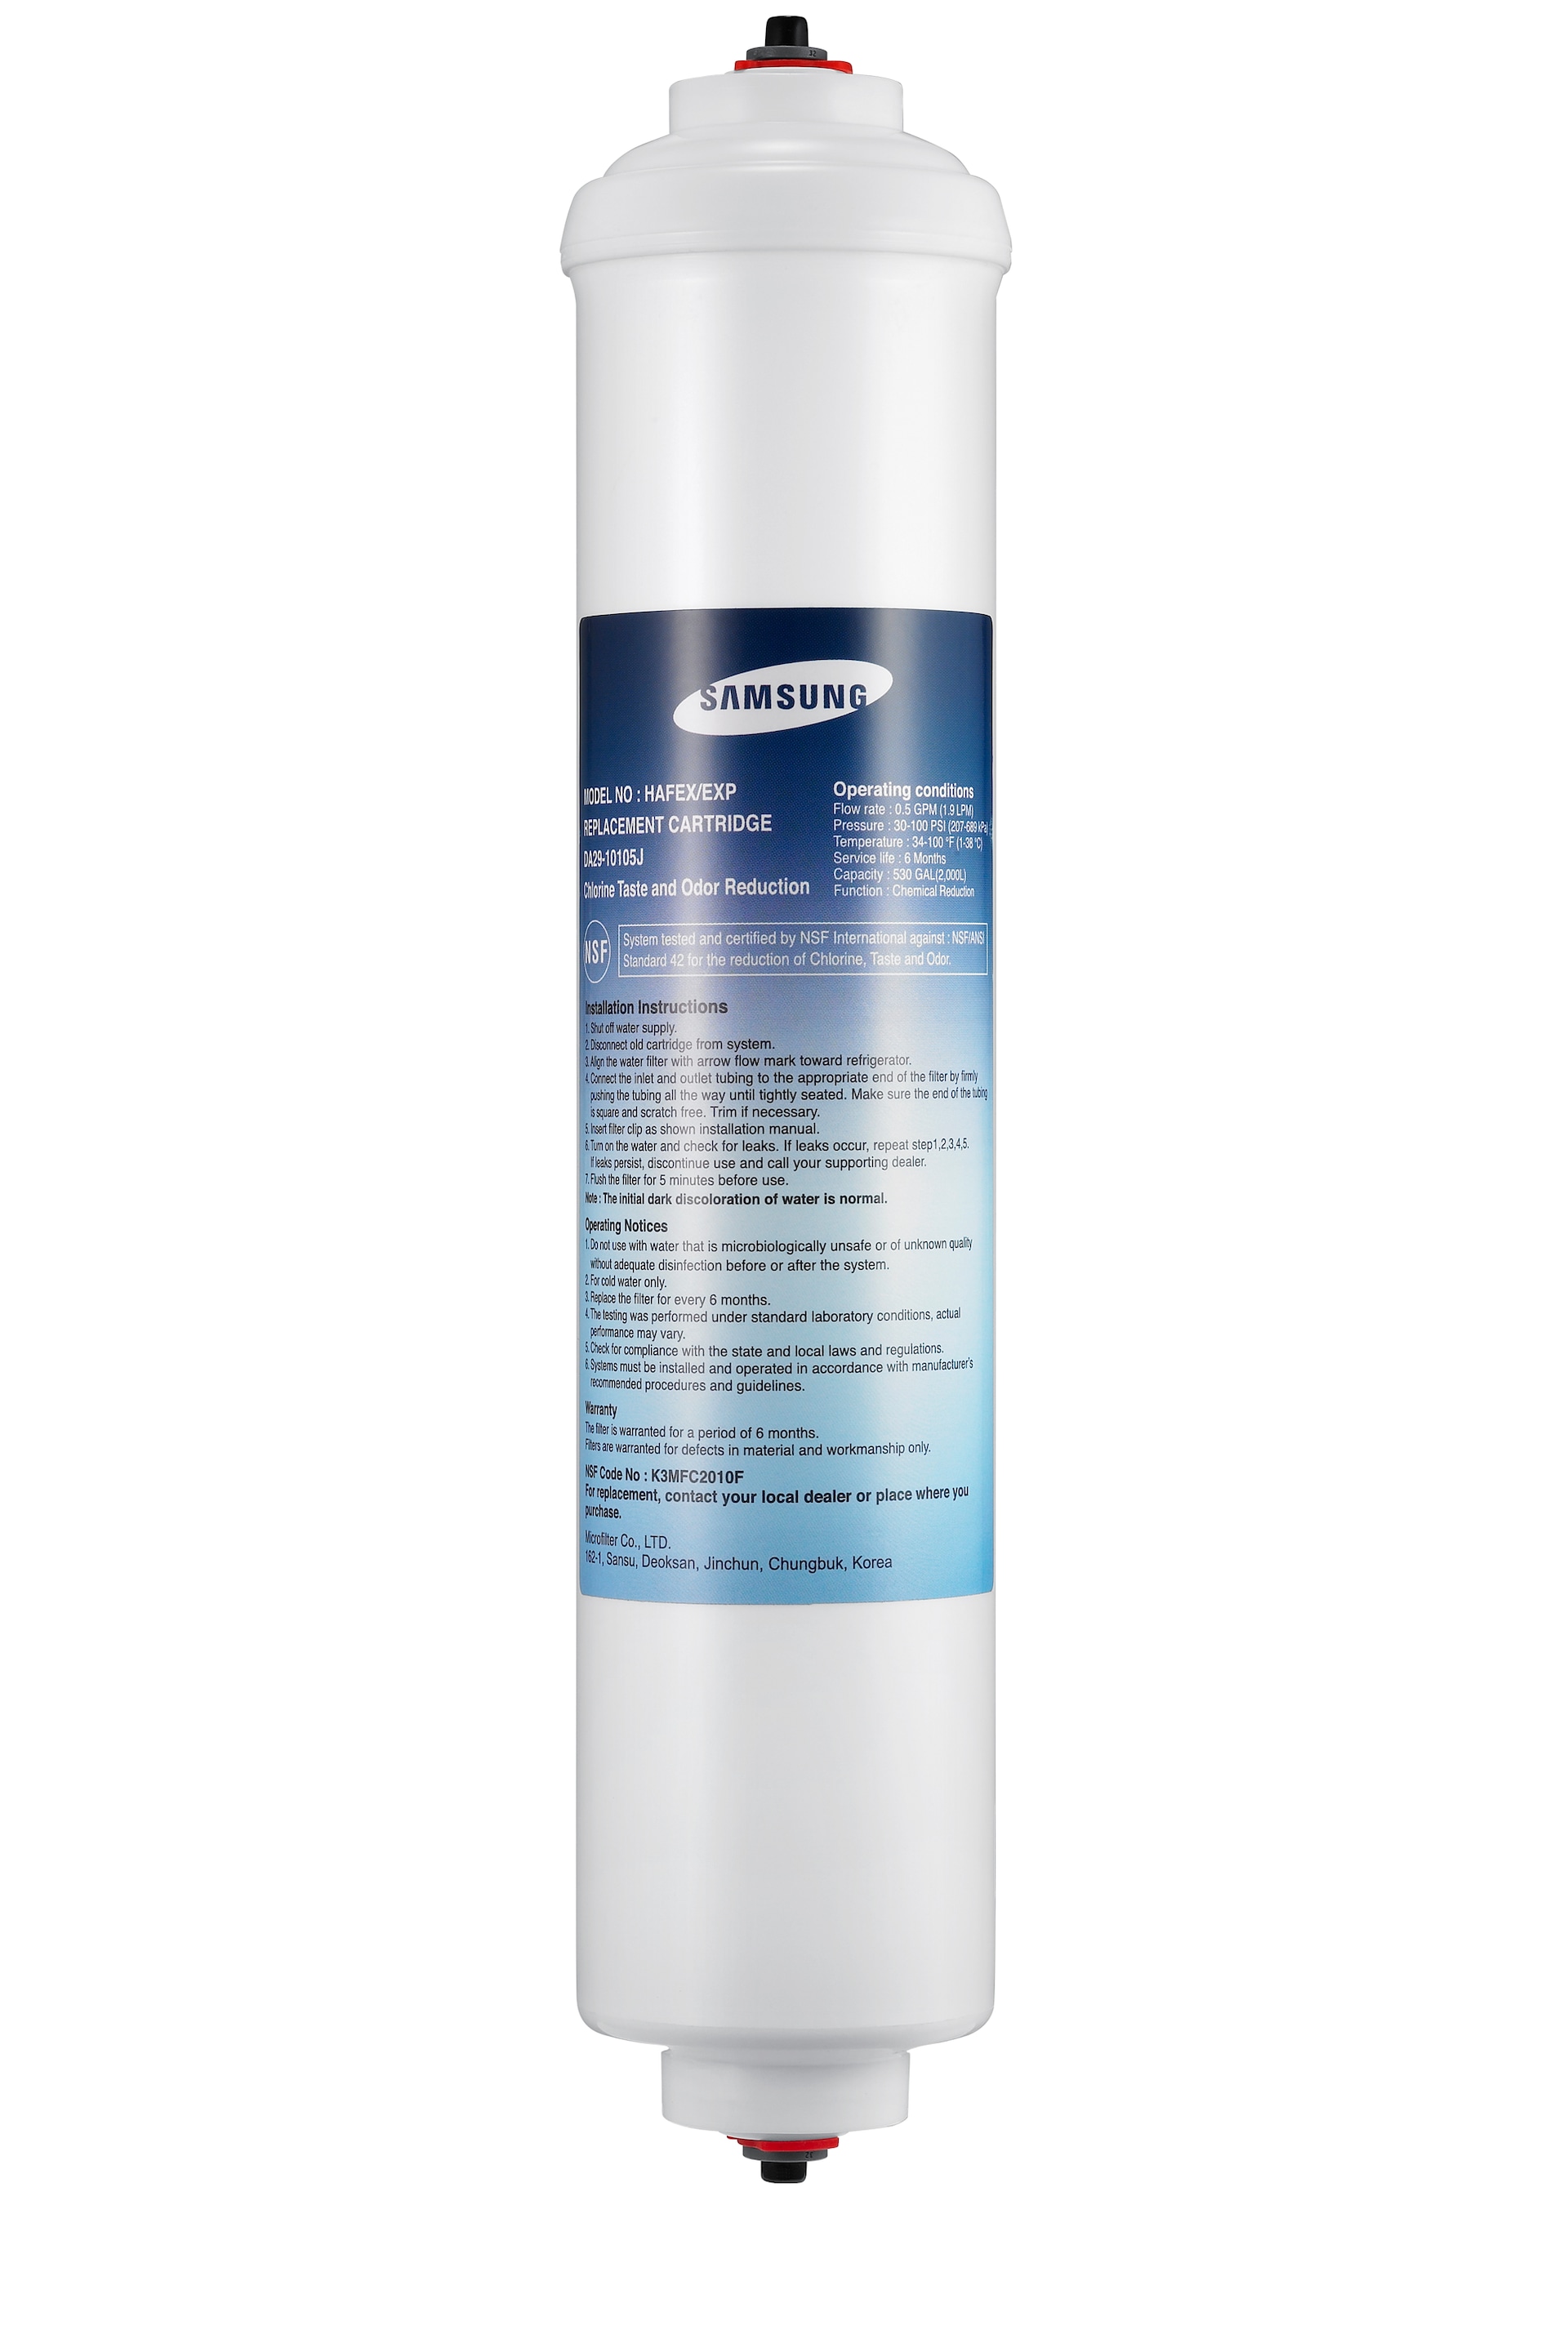 samsung-hafex-genuine-fridge-water-filter-500-gallon-capacity